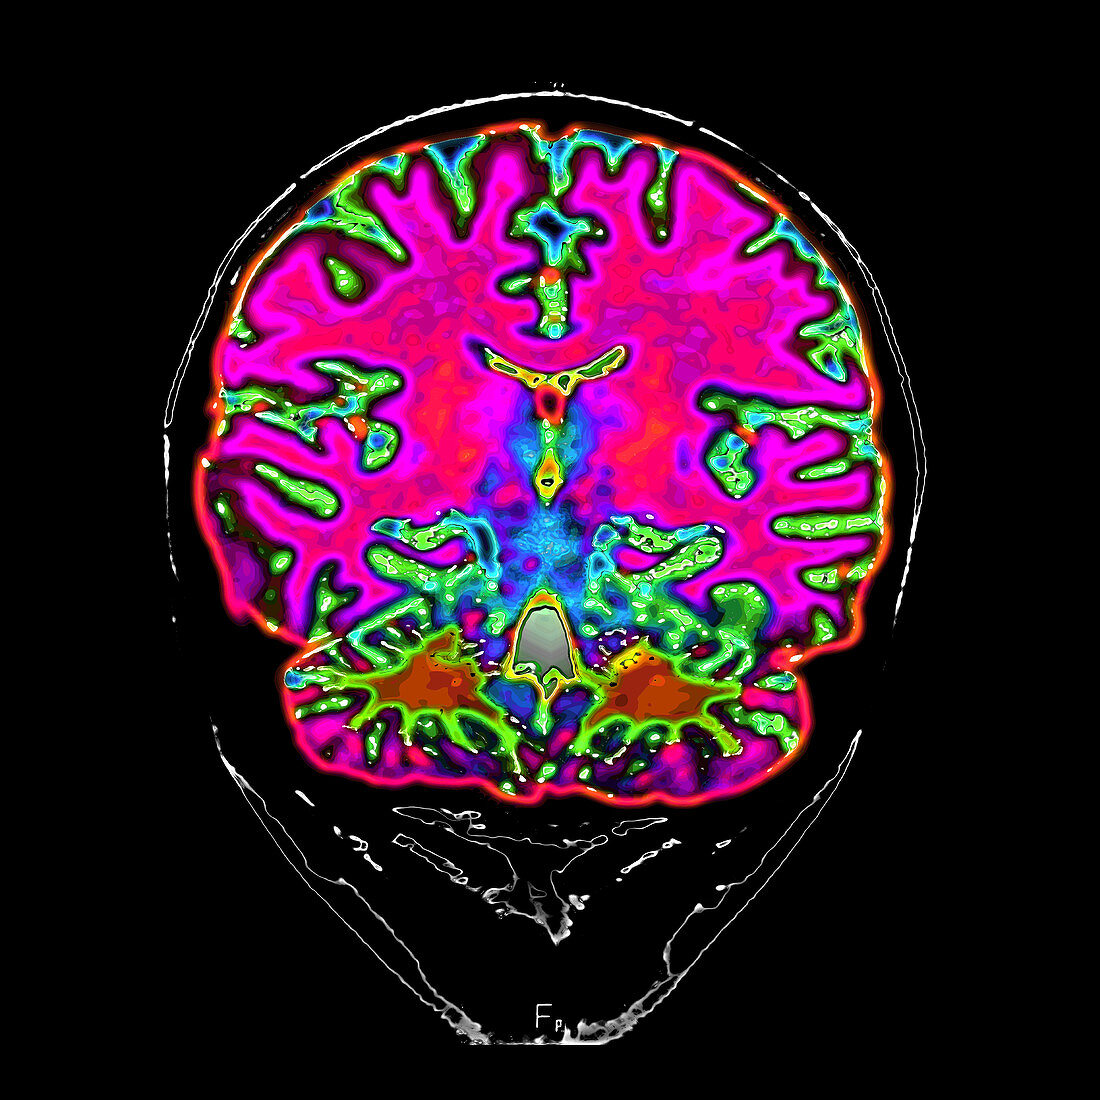 Normal MRI of Brain